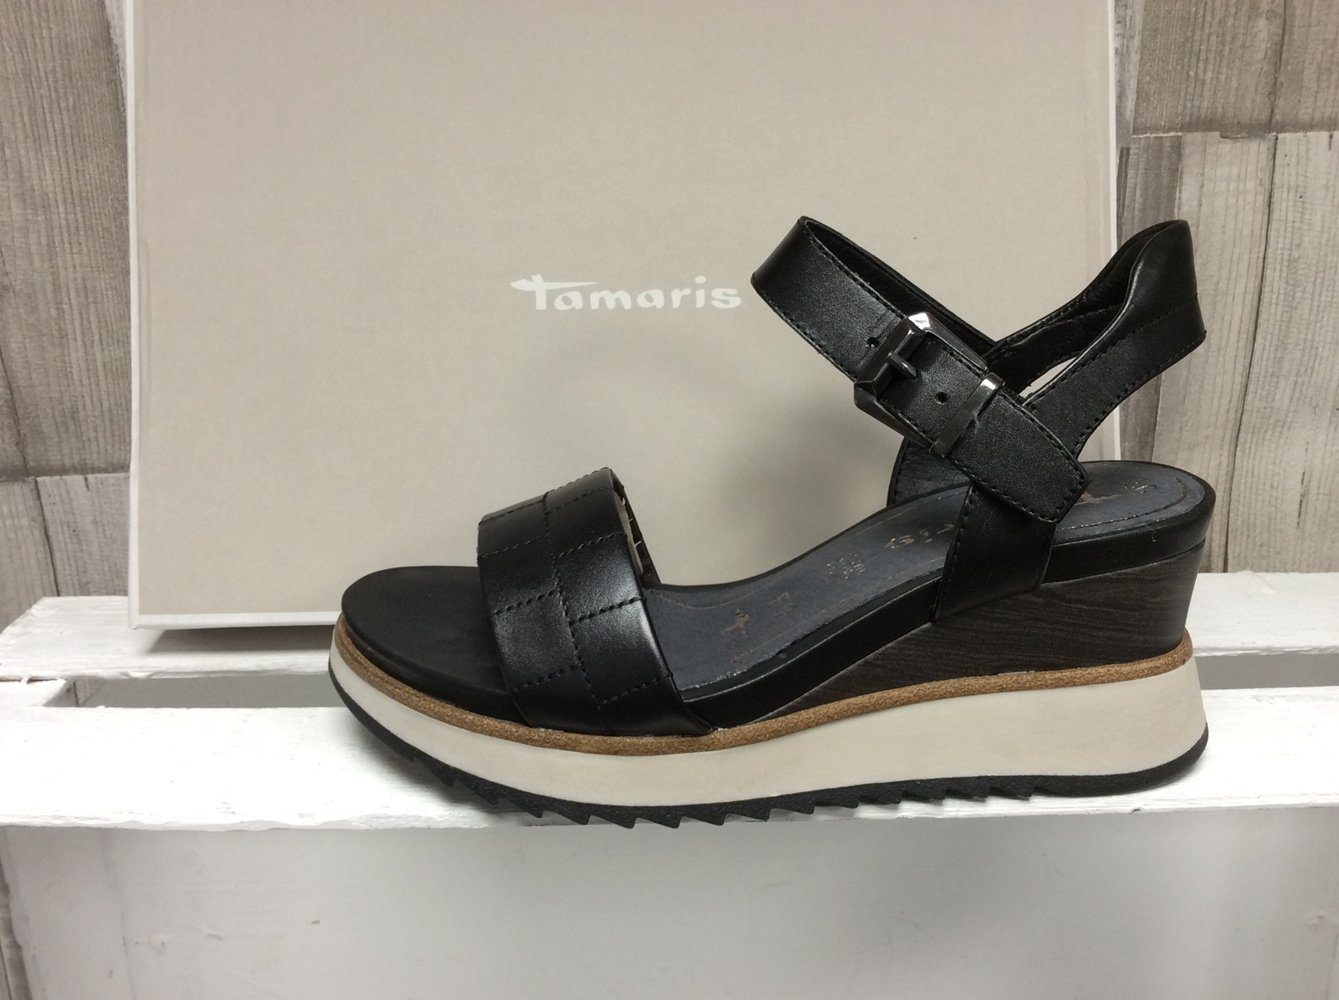 Tamaris Tamaris Damen Keil-Sandale schwarz mit heller Sohle Sandalette